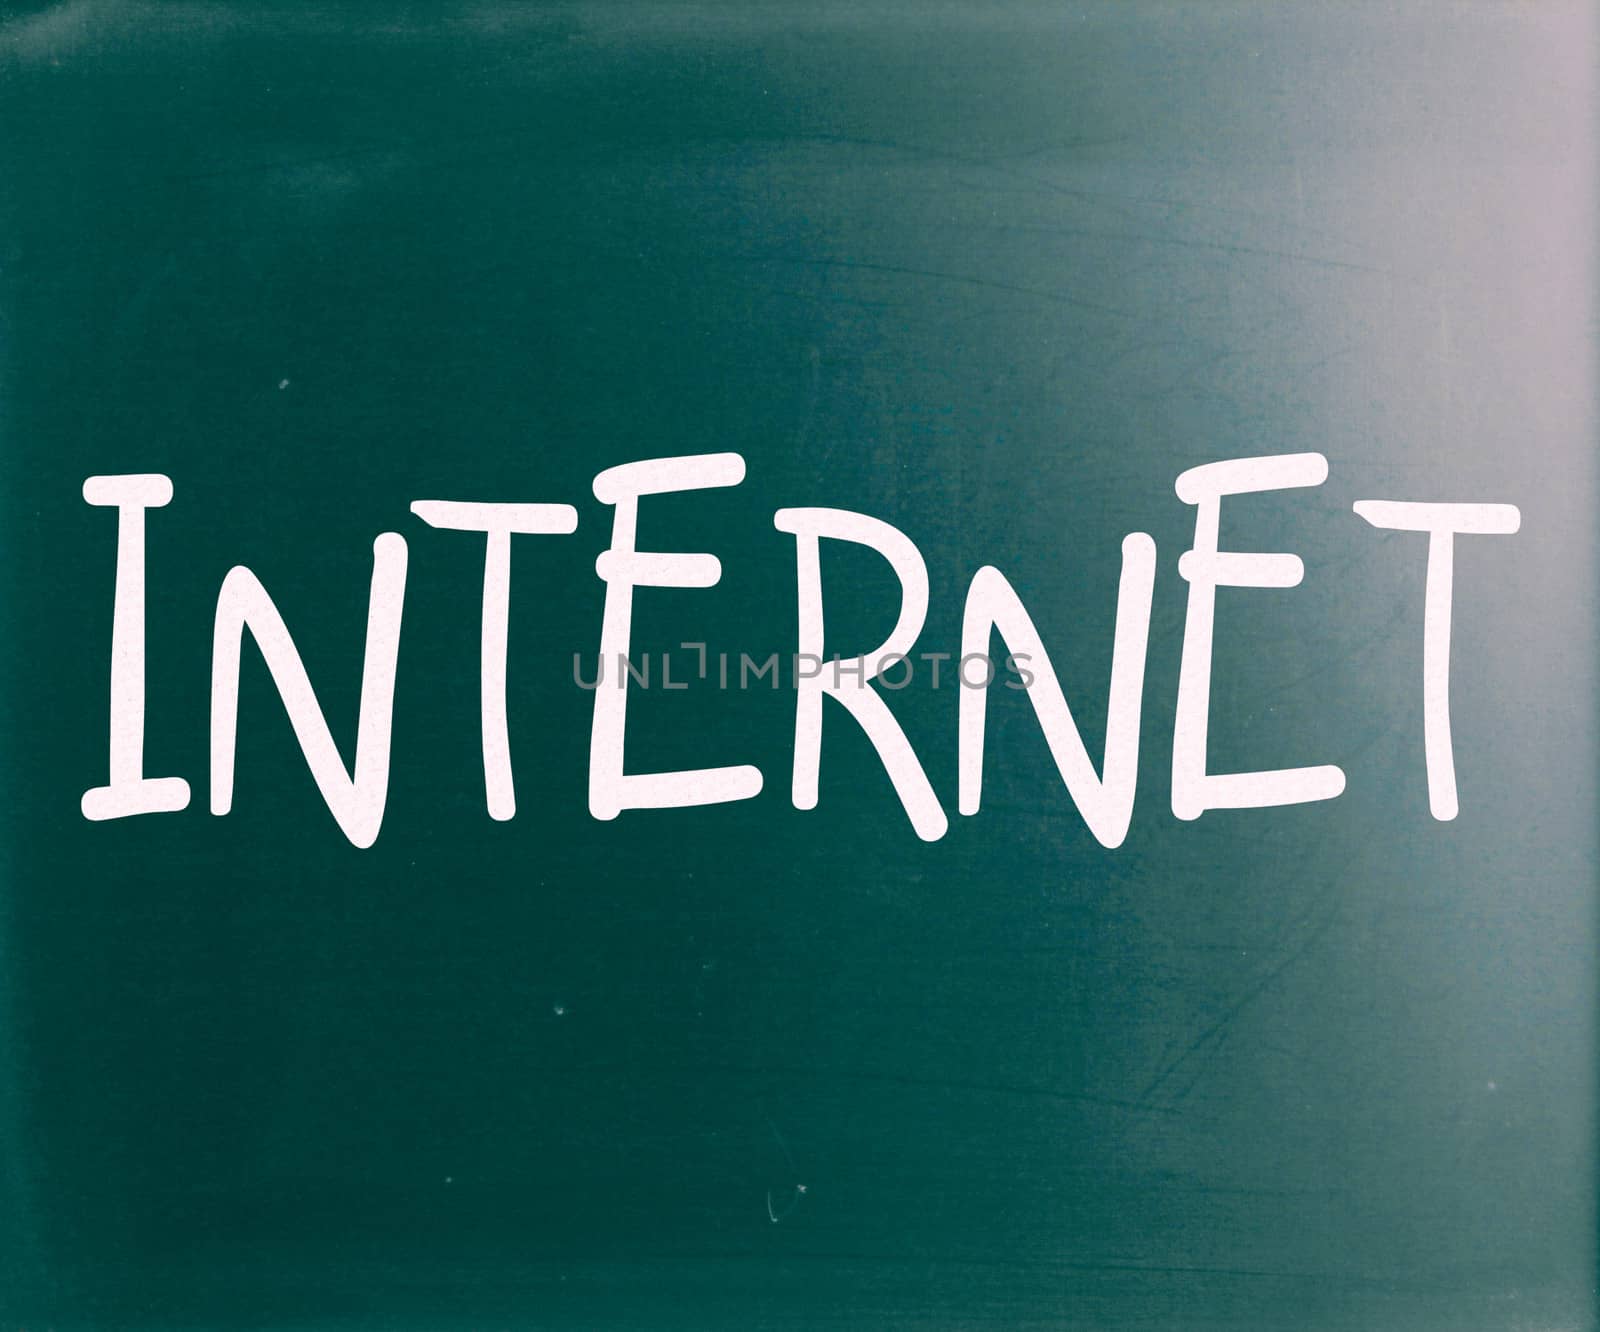 The word "Internet" handwritten with white chalk on a blackboard by nenov